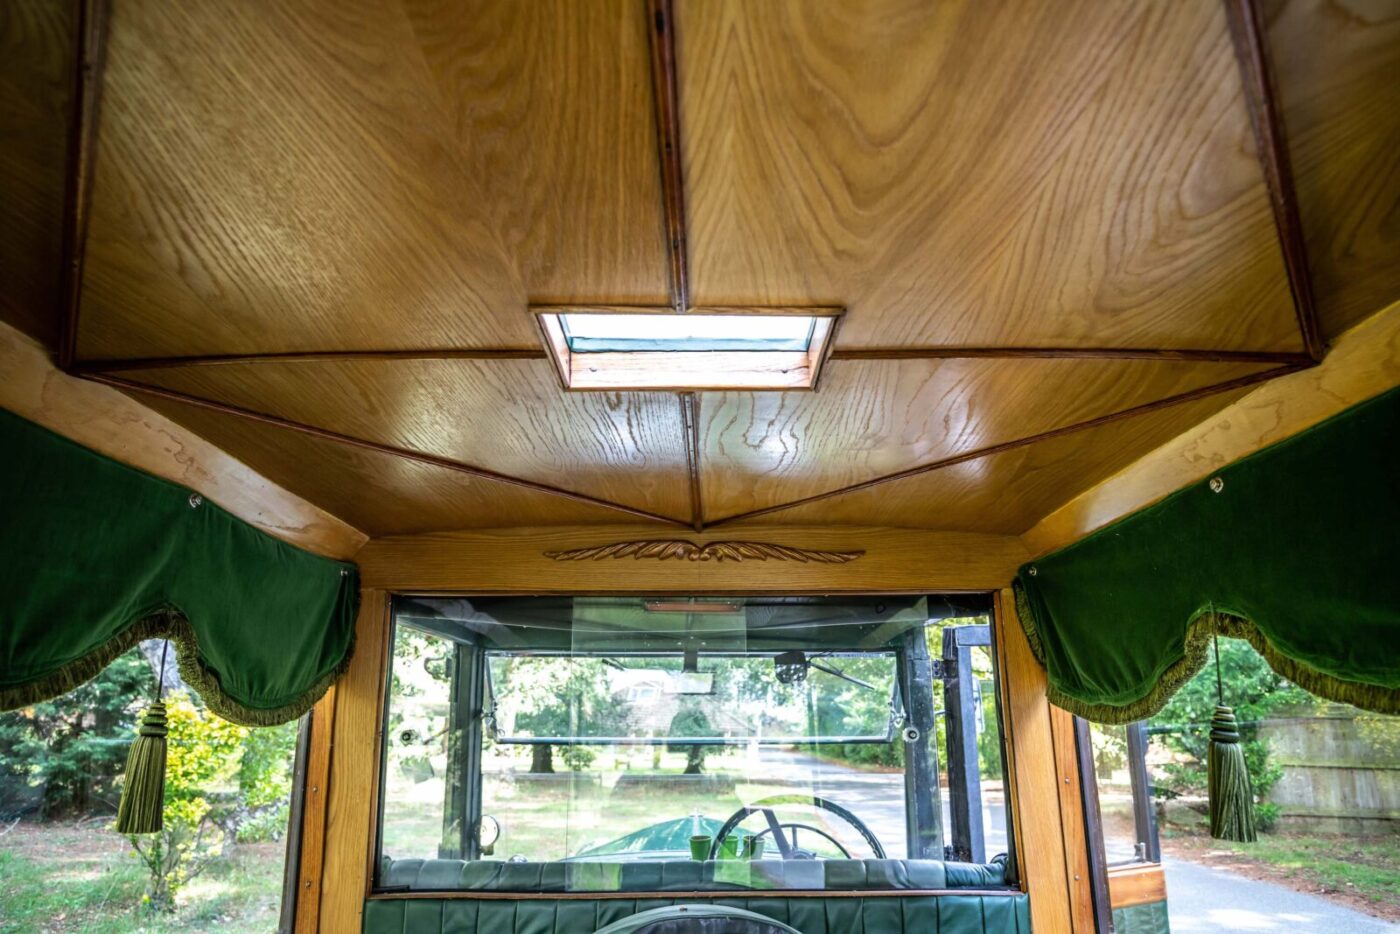 Austin Six hearse oak ceiling